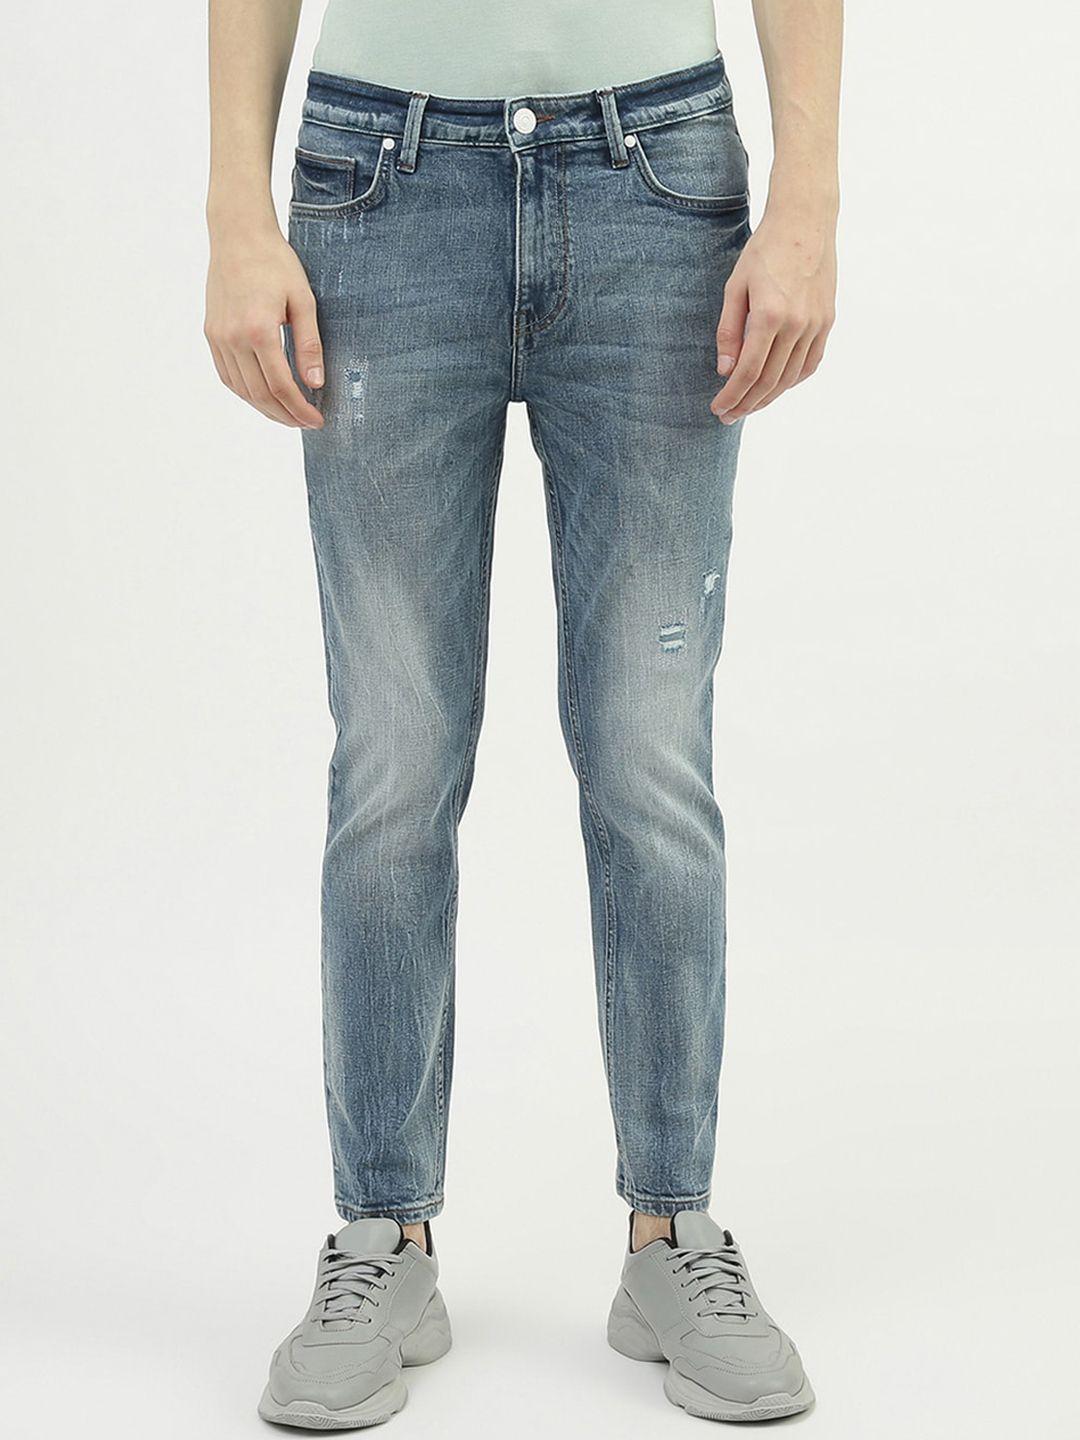 united-colors-of-benetton-men-cotton-low-distress-heavy-fade-jeans